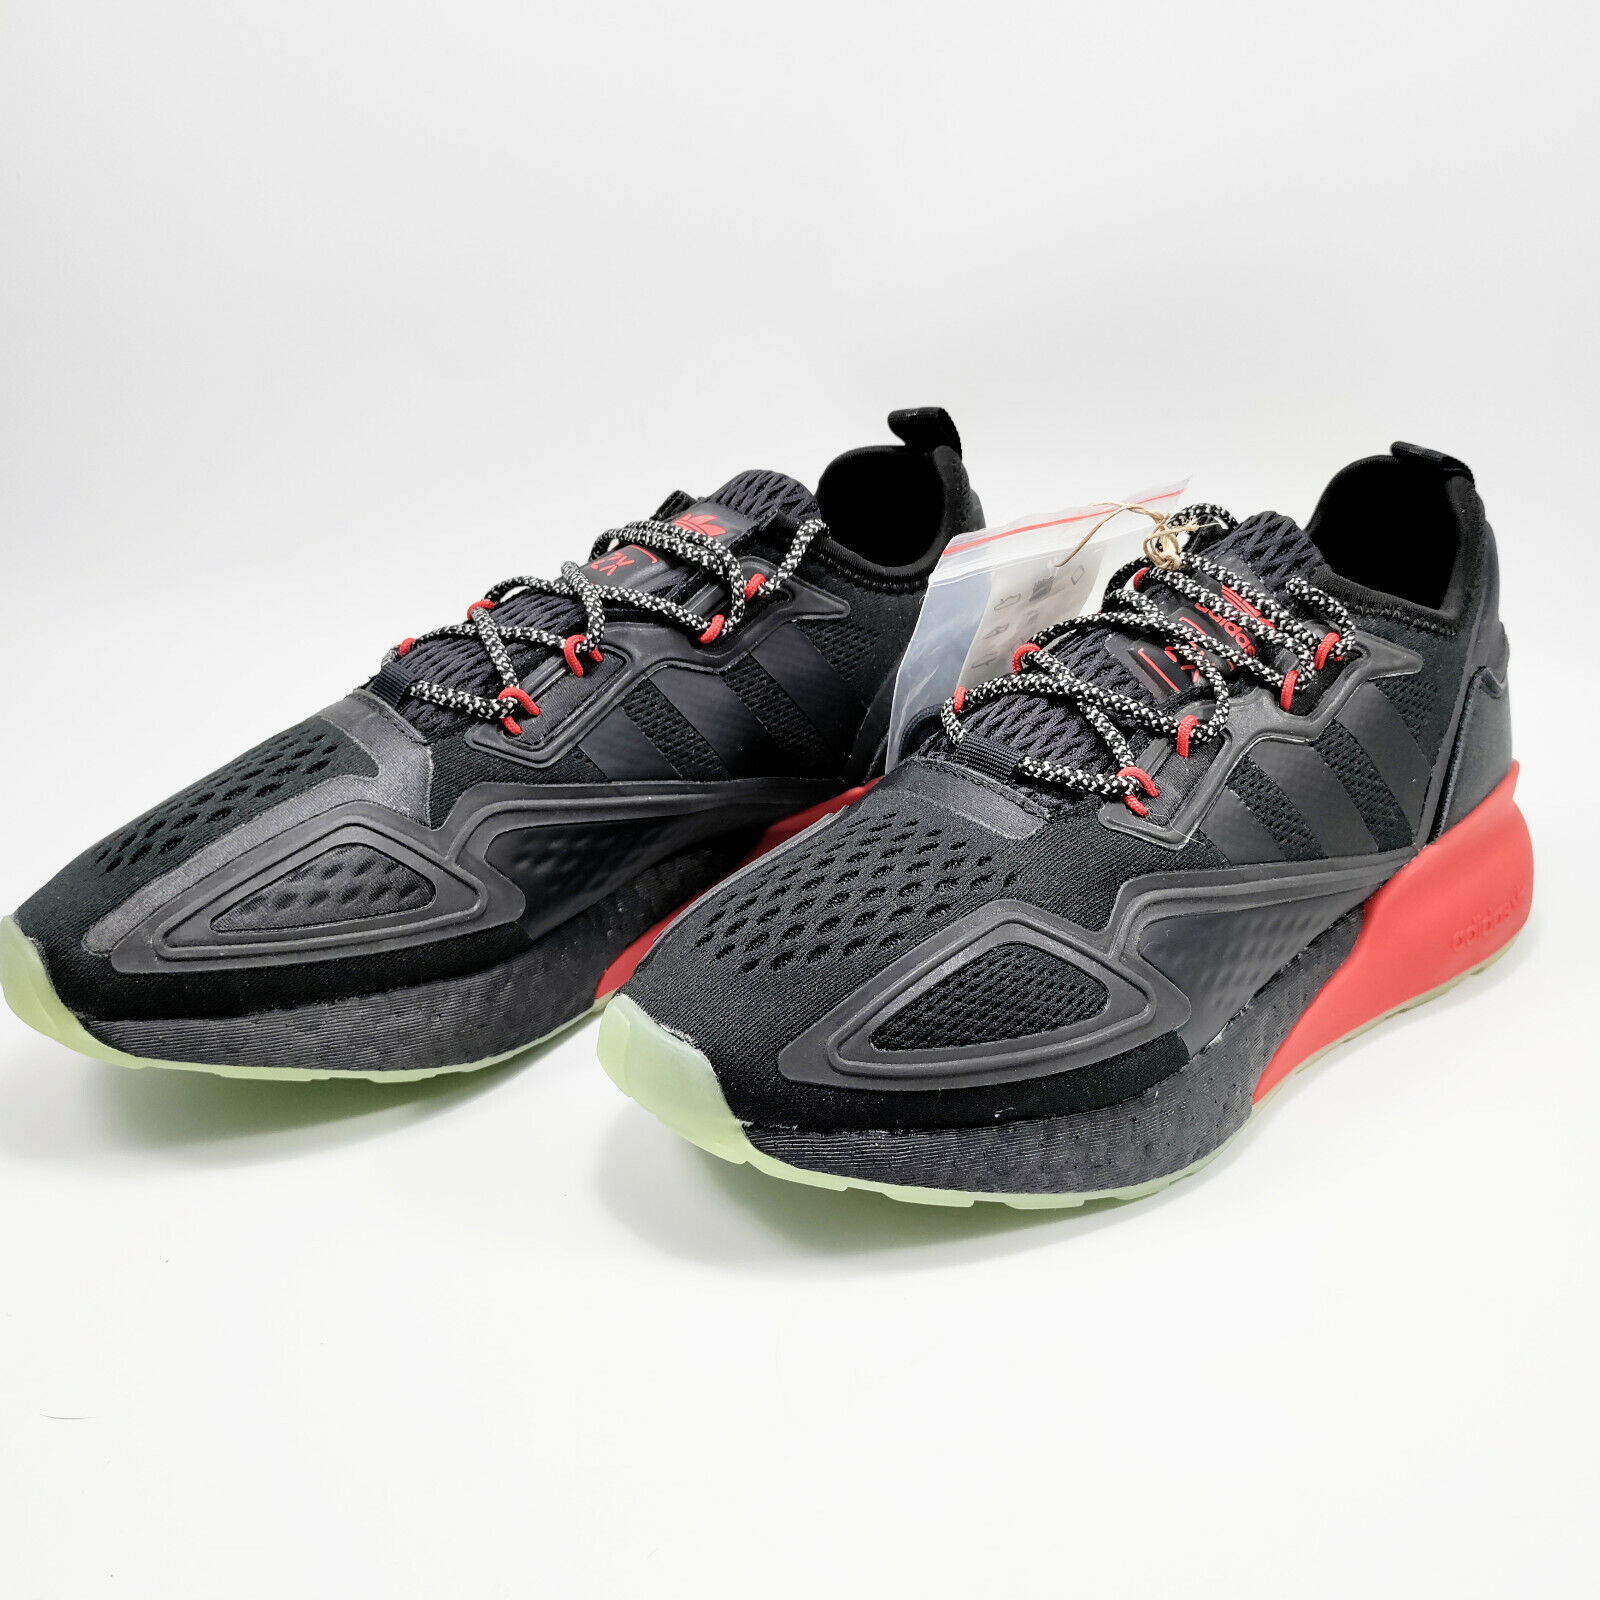 Adidas ZX 2K Boost 'Black Scarlet' Shoes Men's Black / Red H01925 SZ 8.5 NEW